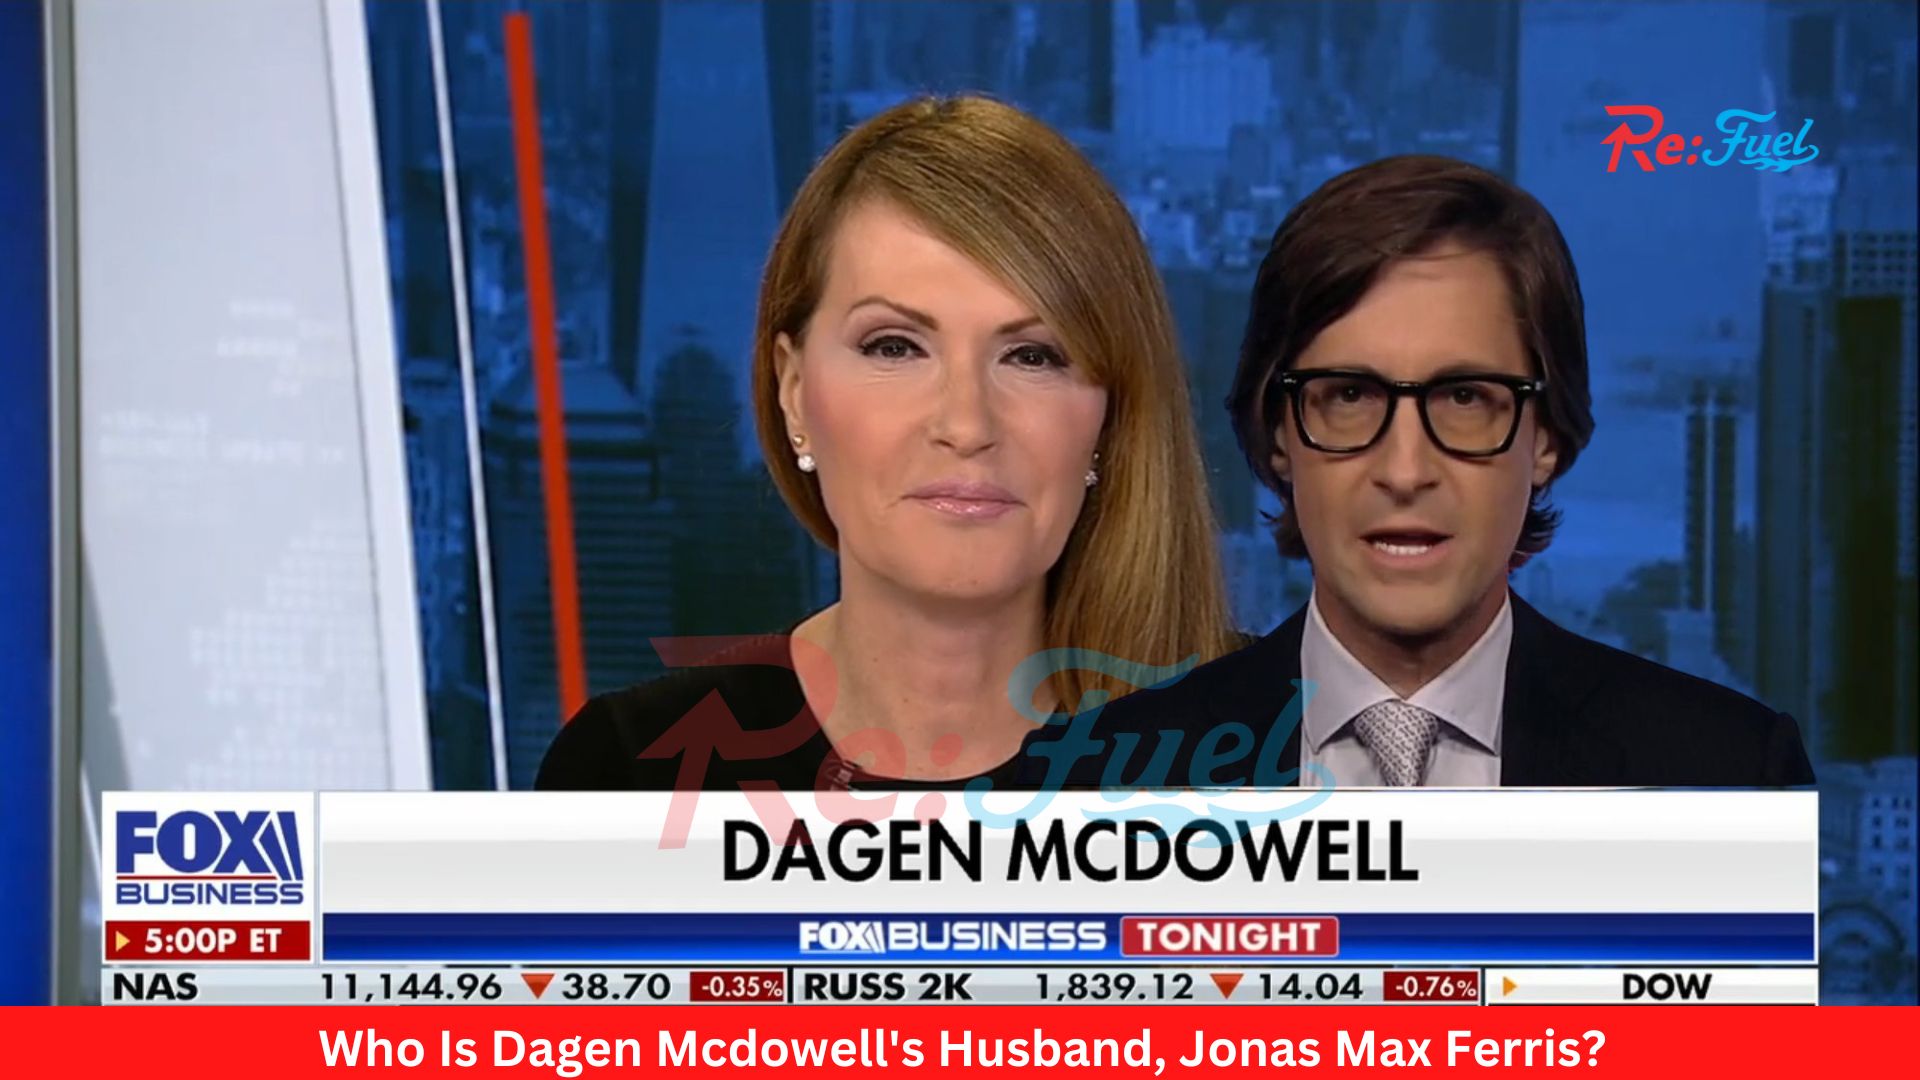 Who Is Dagen Mcdowell's Husband, Jonas Max Ferris?